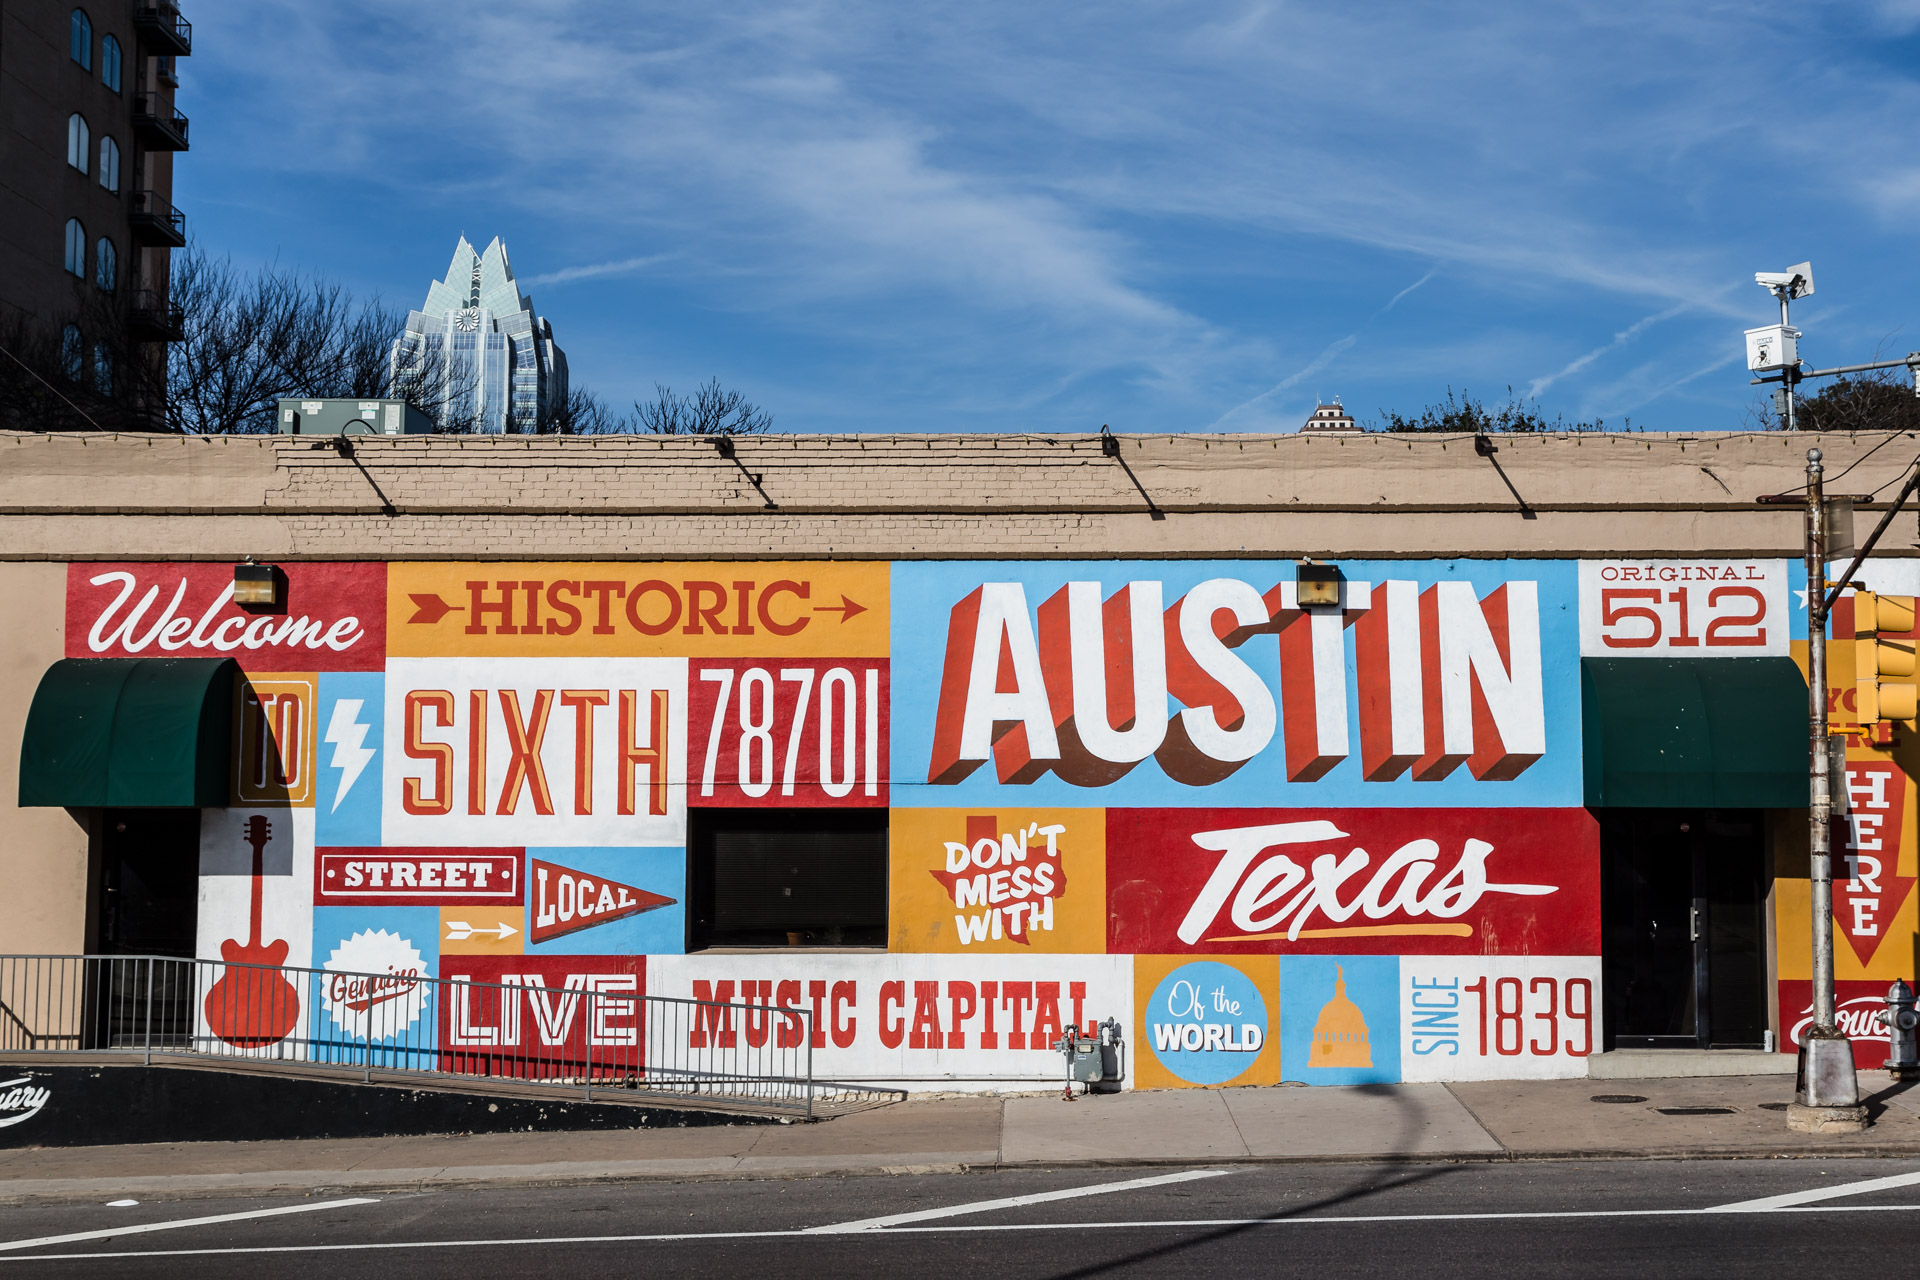 Austin Street Art (historic sixth)